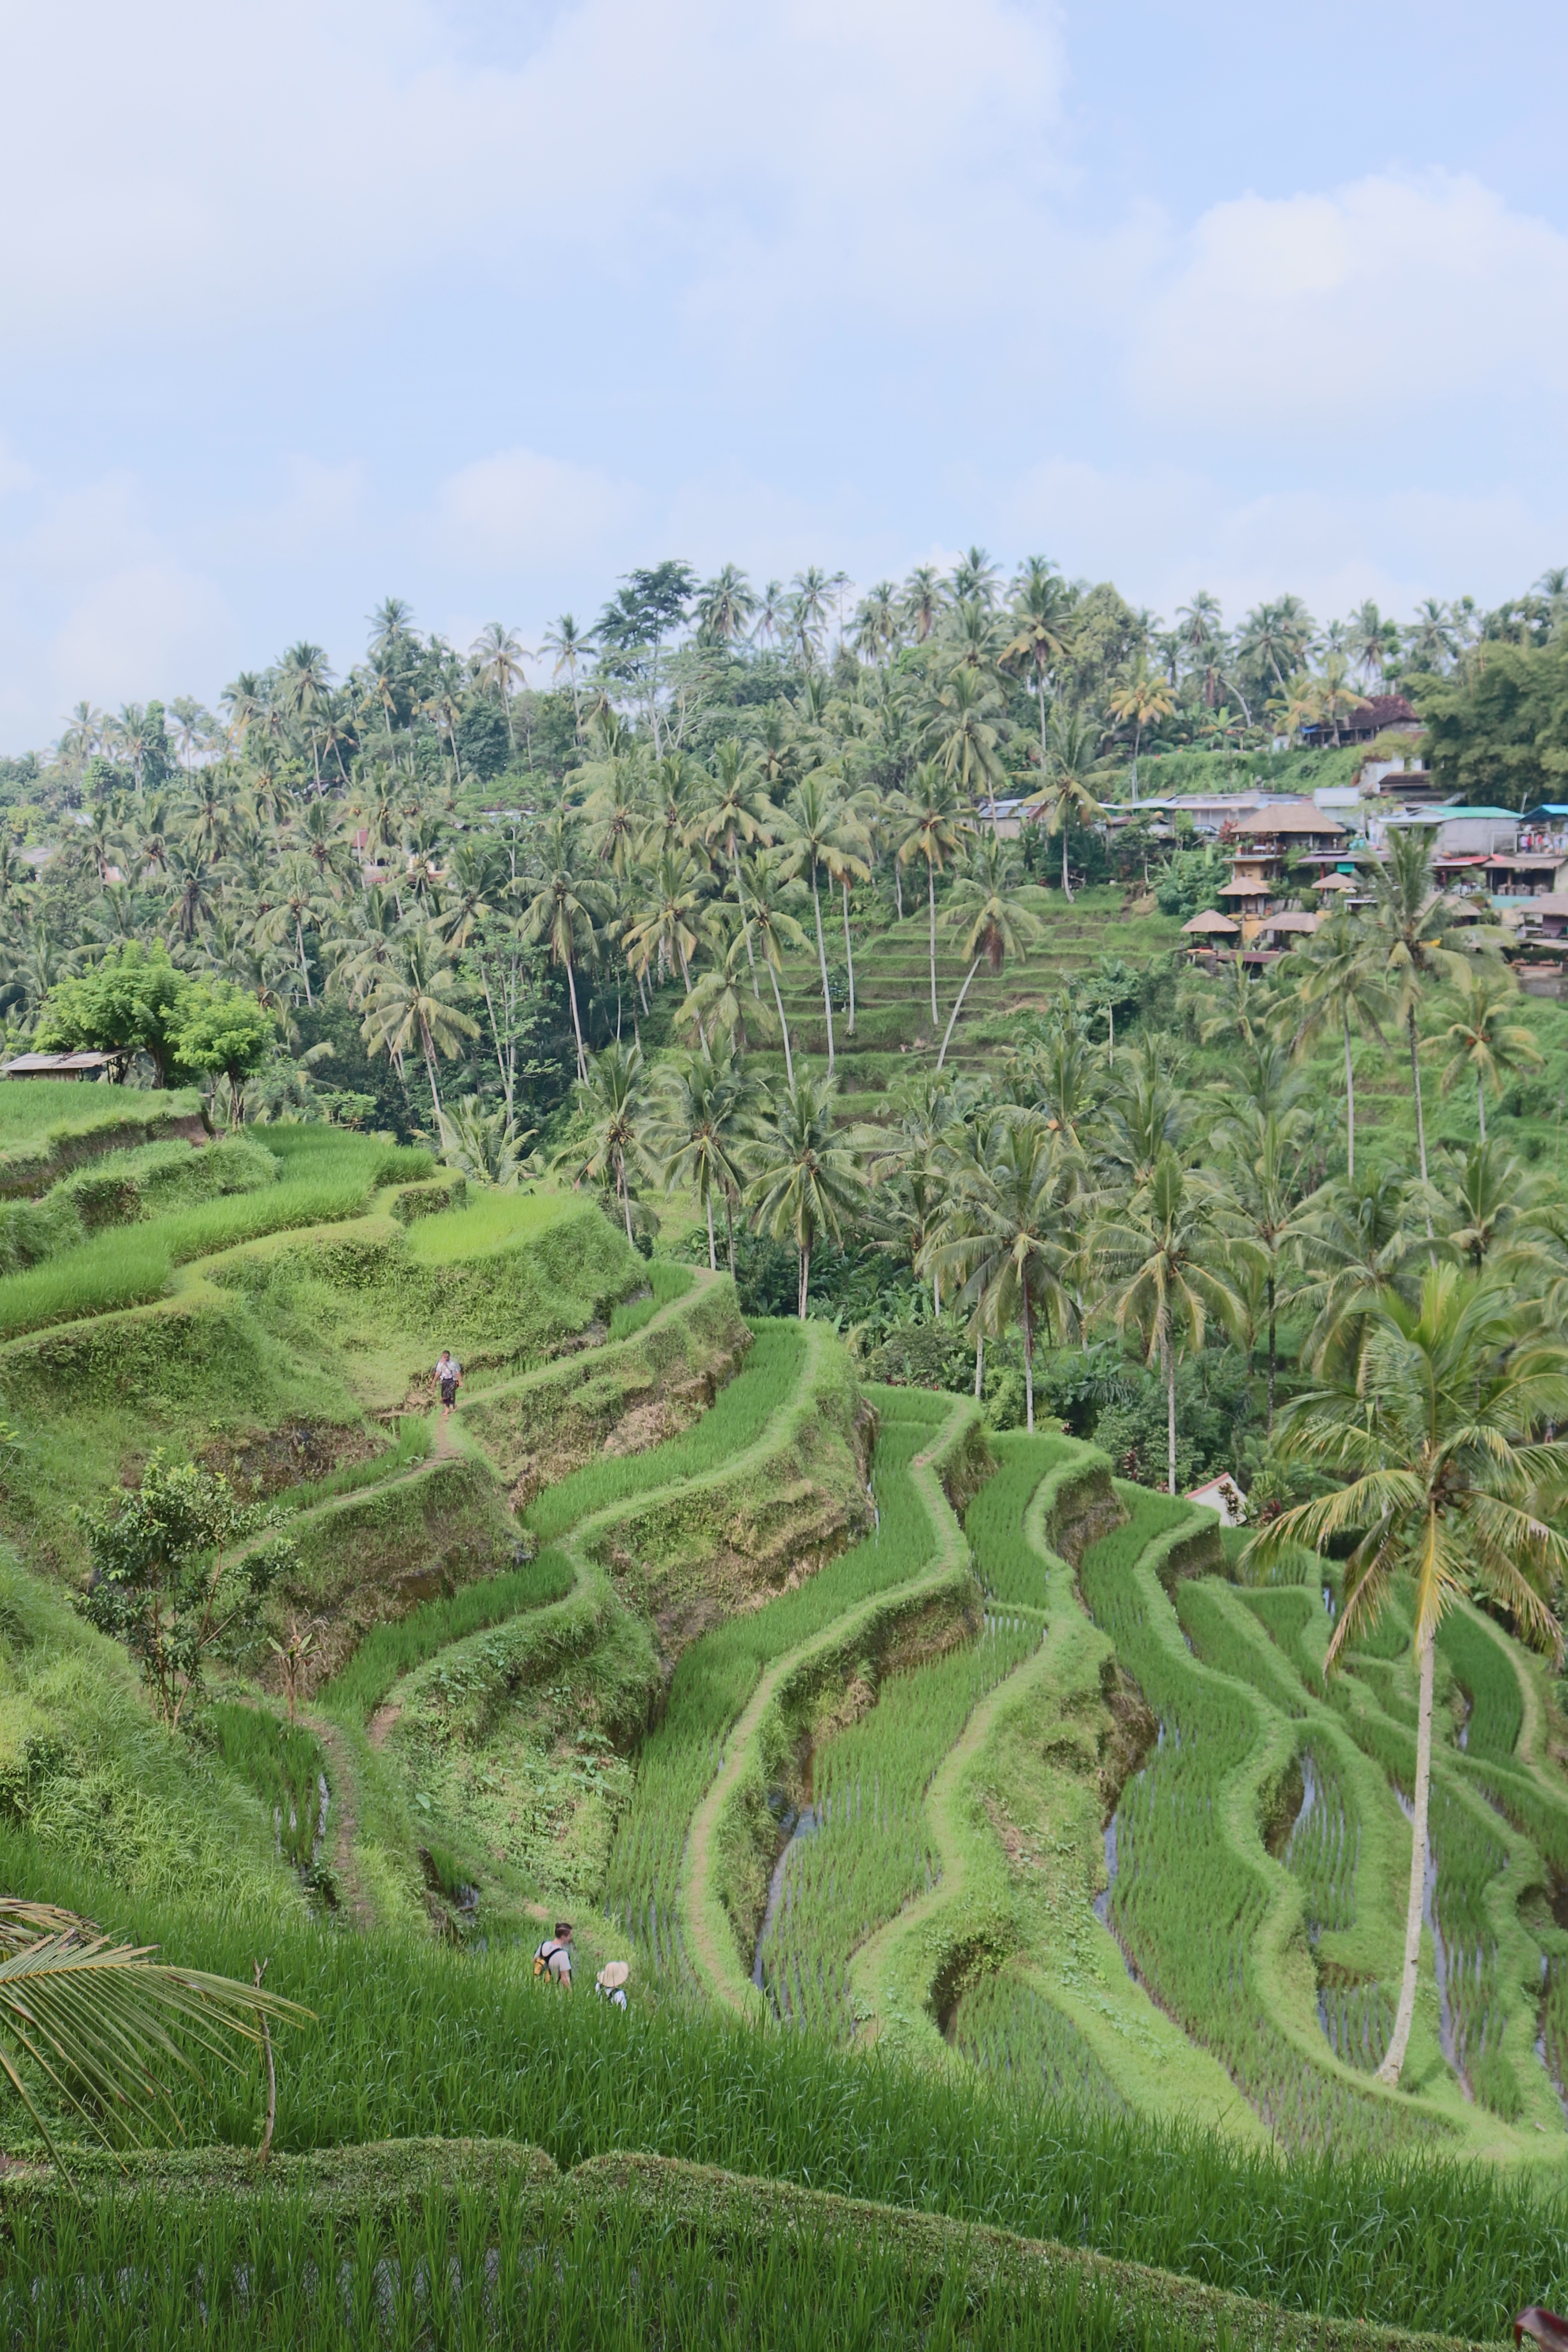 Tegallaleng Rice Terraces in Ubud, Bali, Indonesia